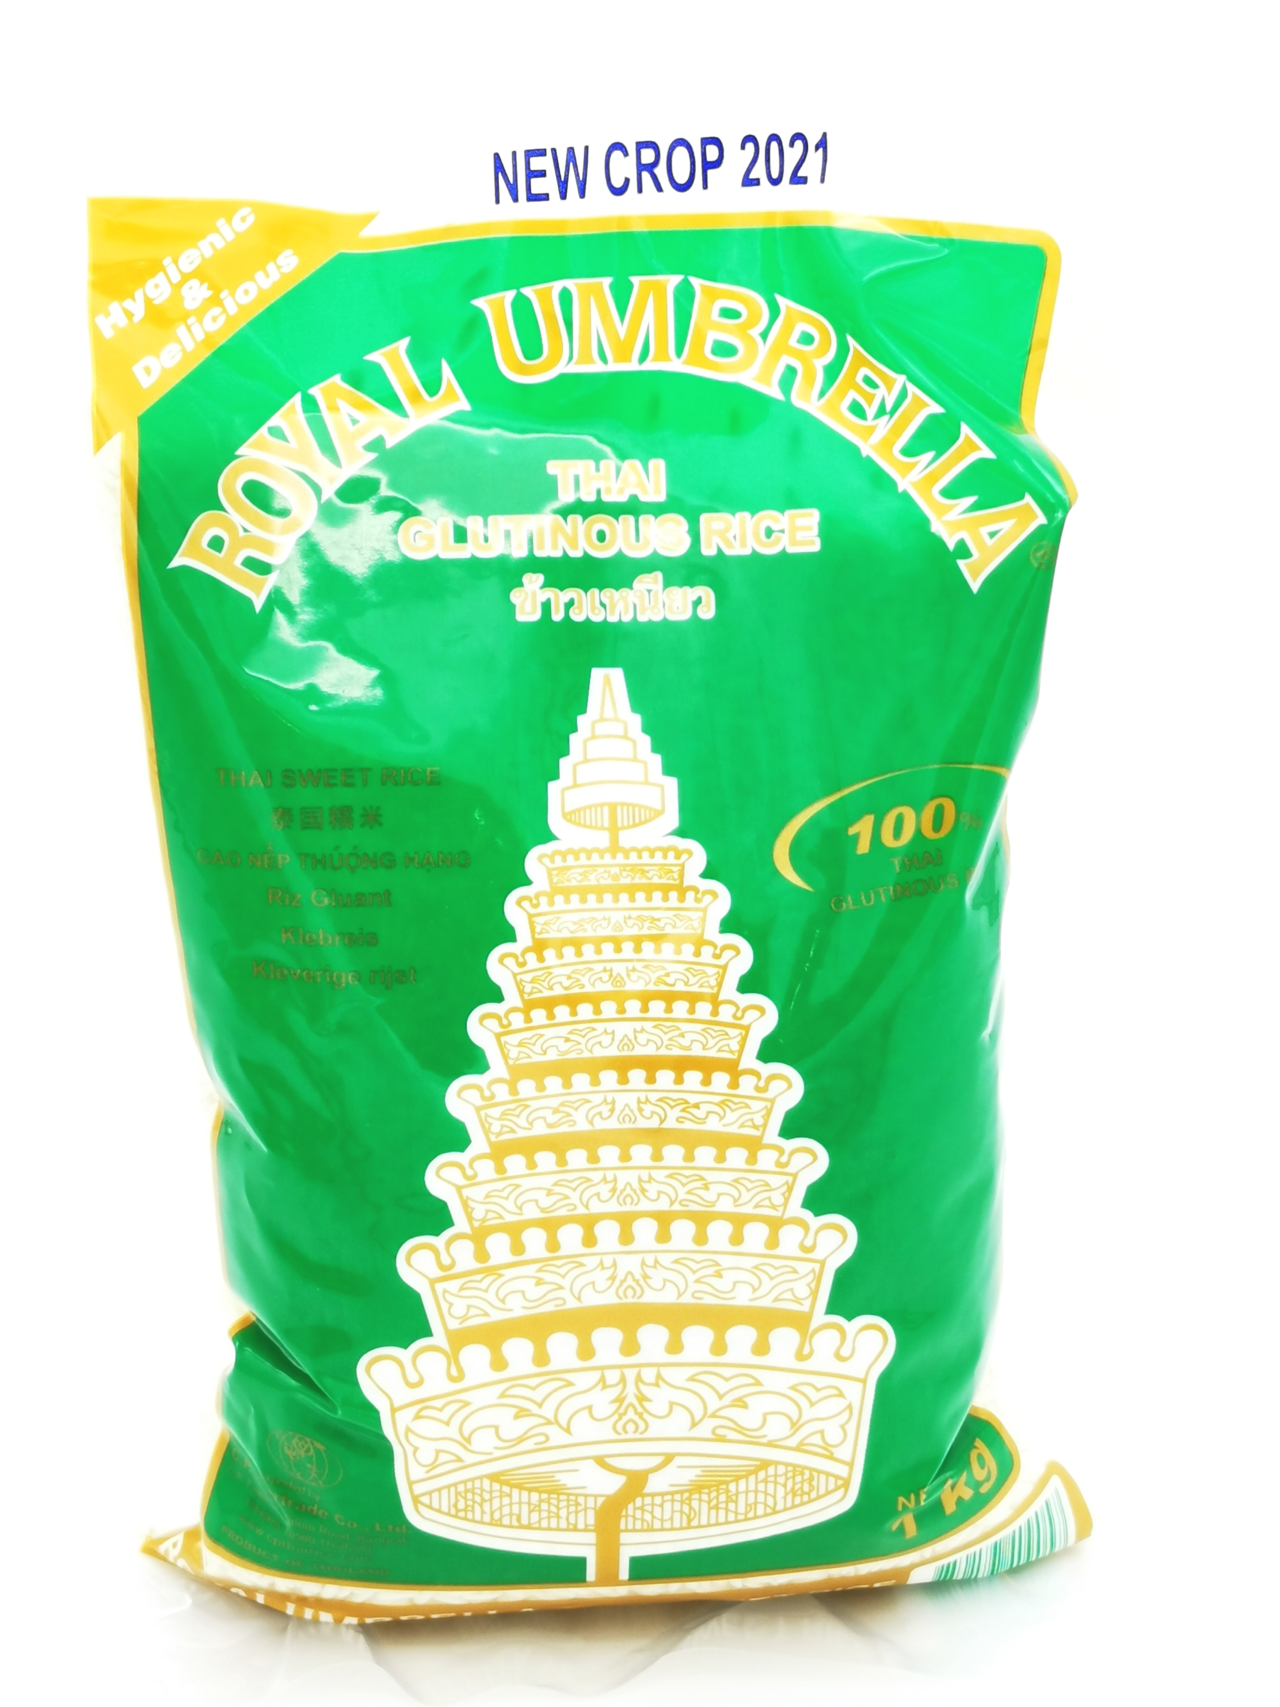 Royal umbrella glutinous rice 1kg 皇族糯米